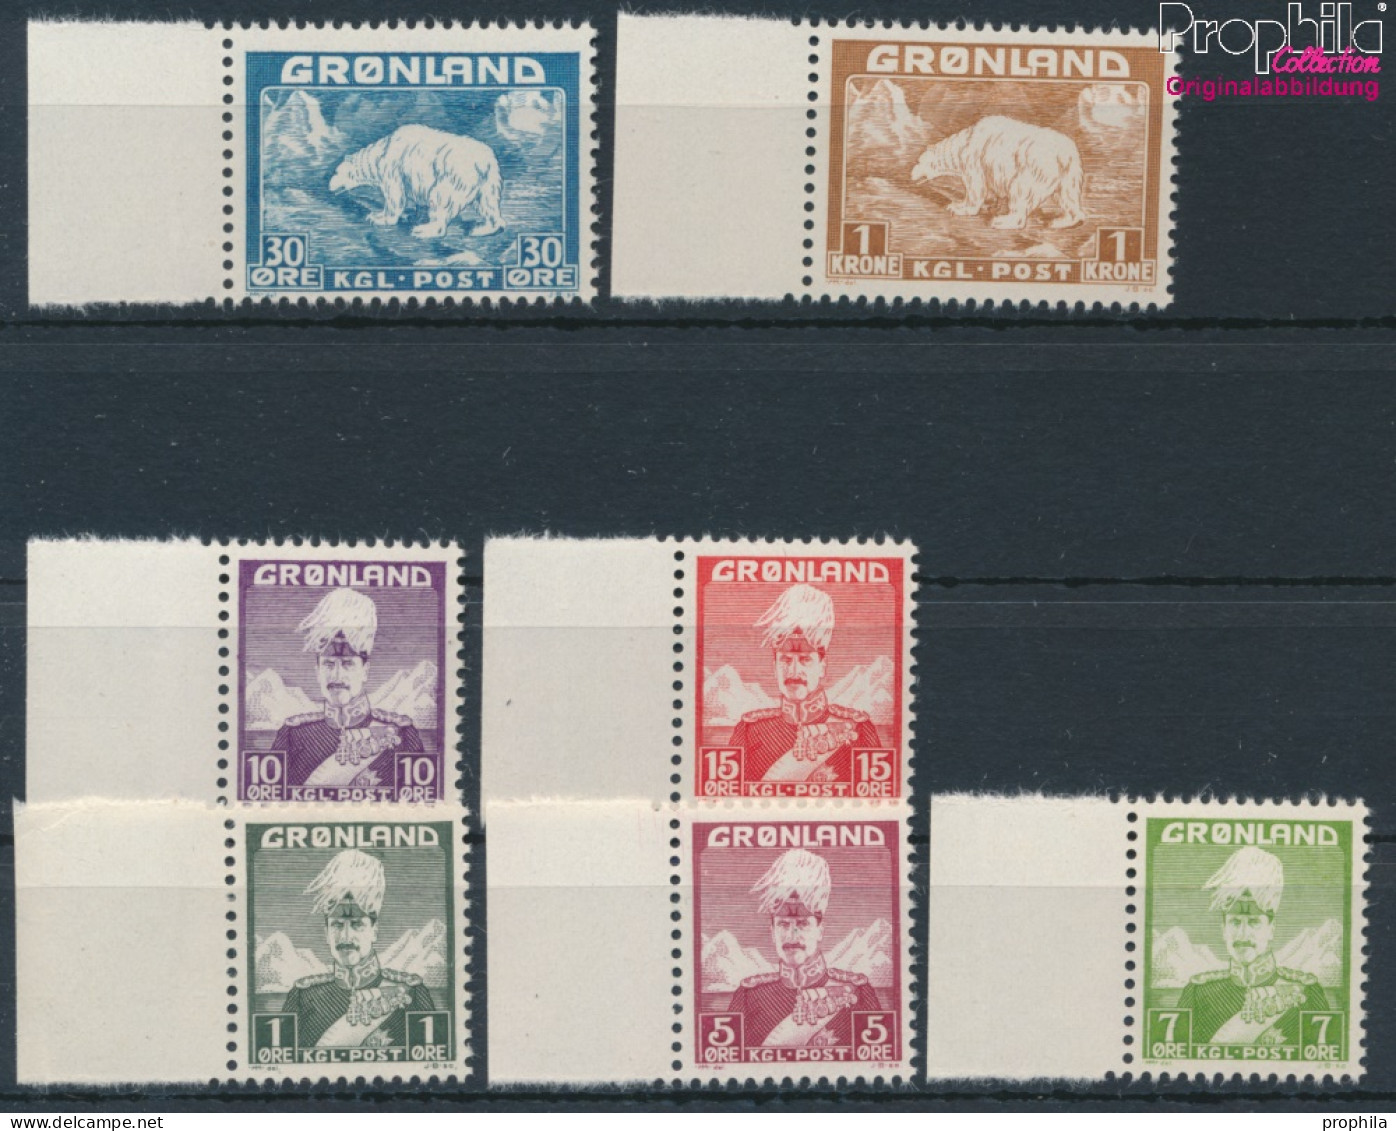 Dänemark - Grönland Postfrisch Christian X. 1938 König Christian X.  (10174202 - Gebruikt